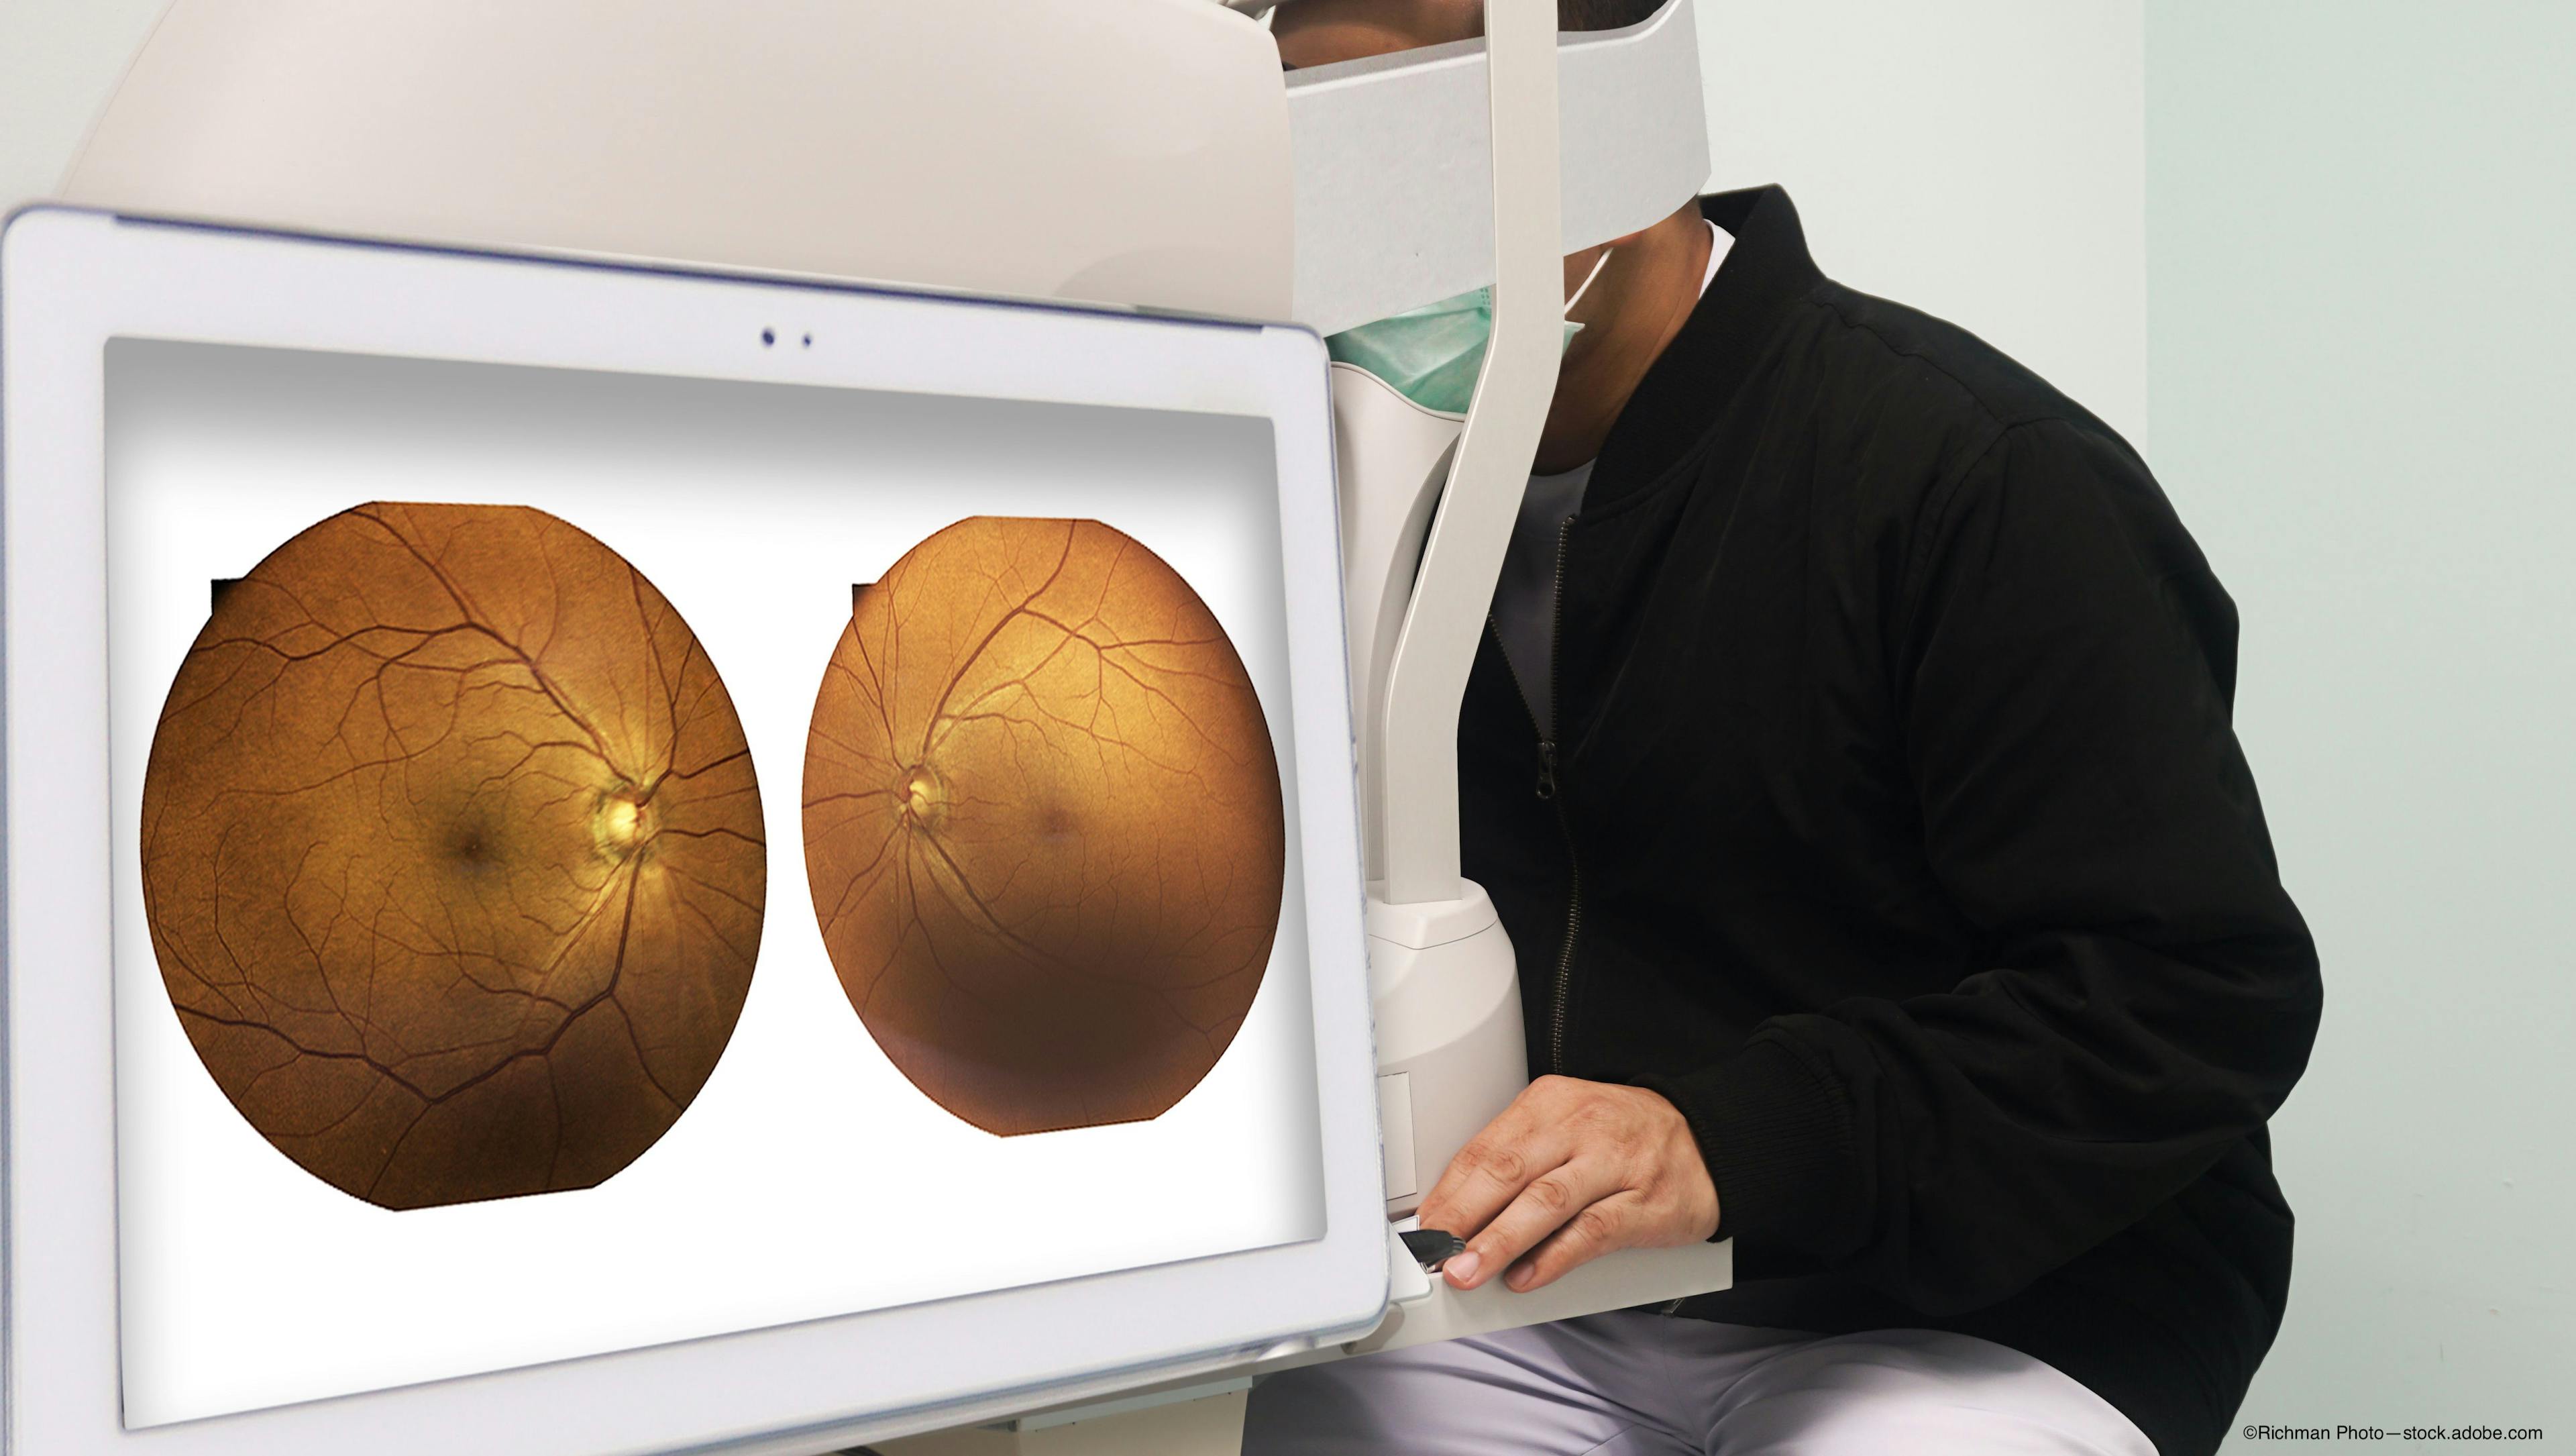 Teleretinal screening for diabetic retinopathy provides effective disease monitoring